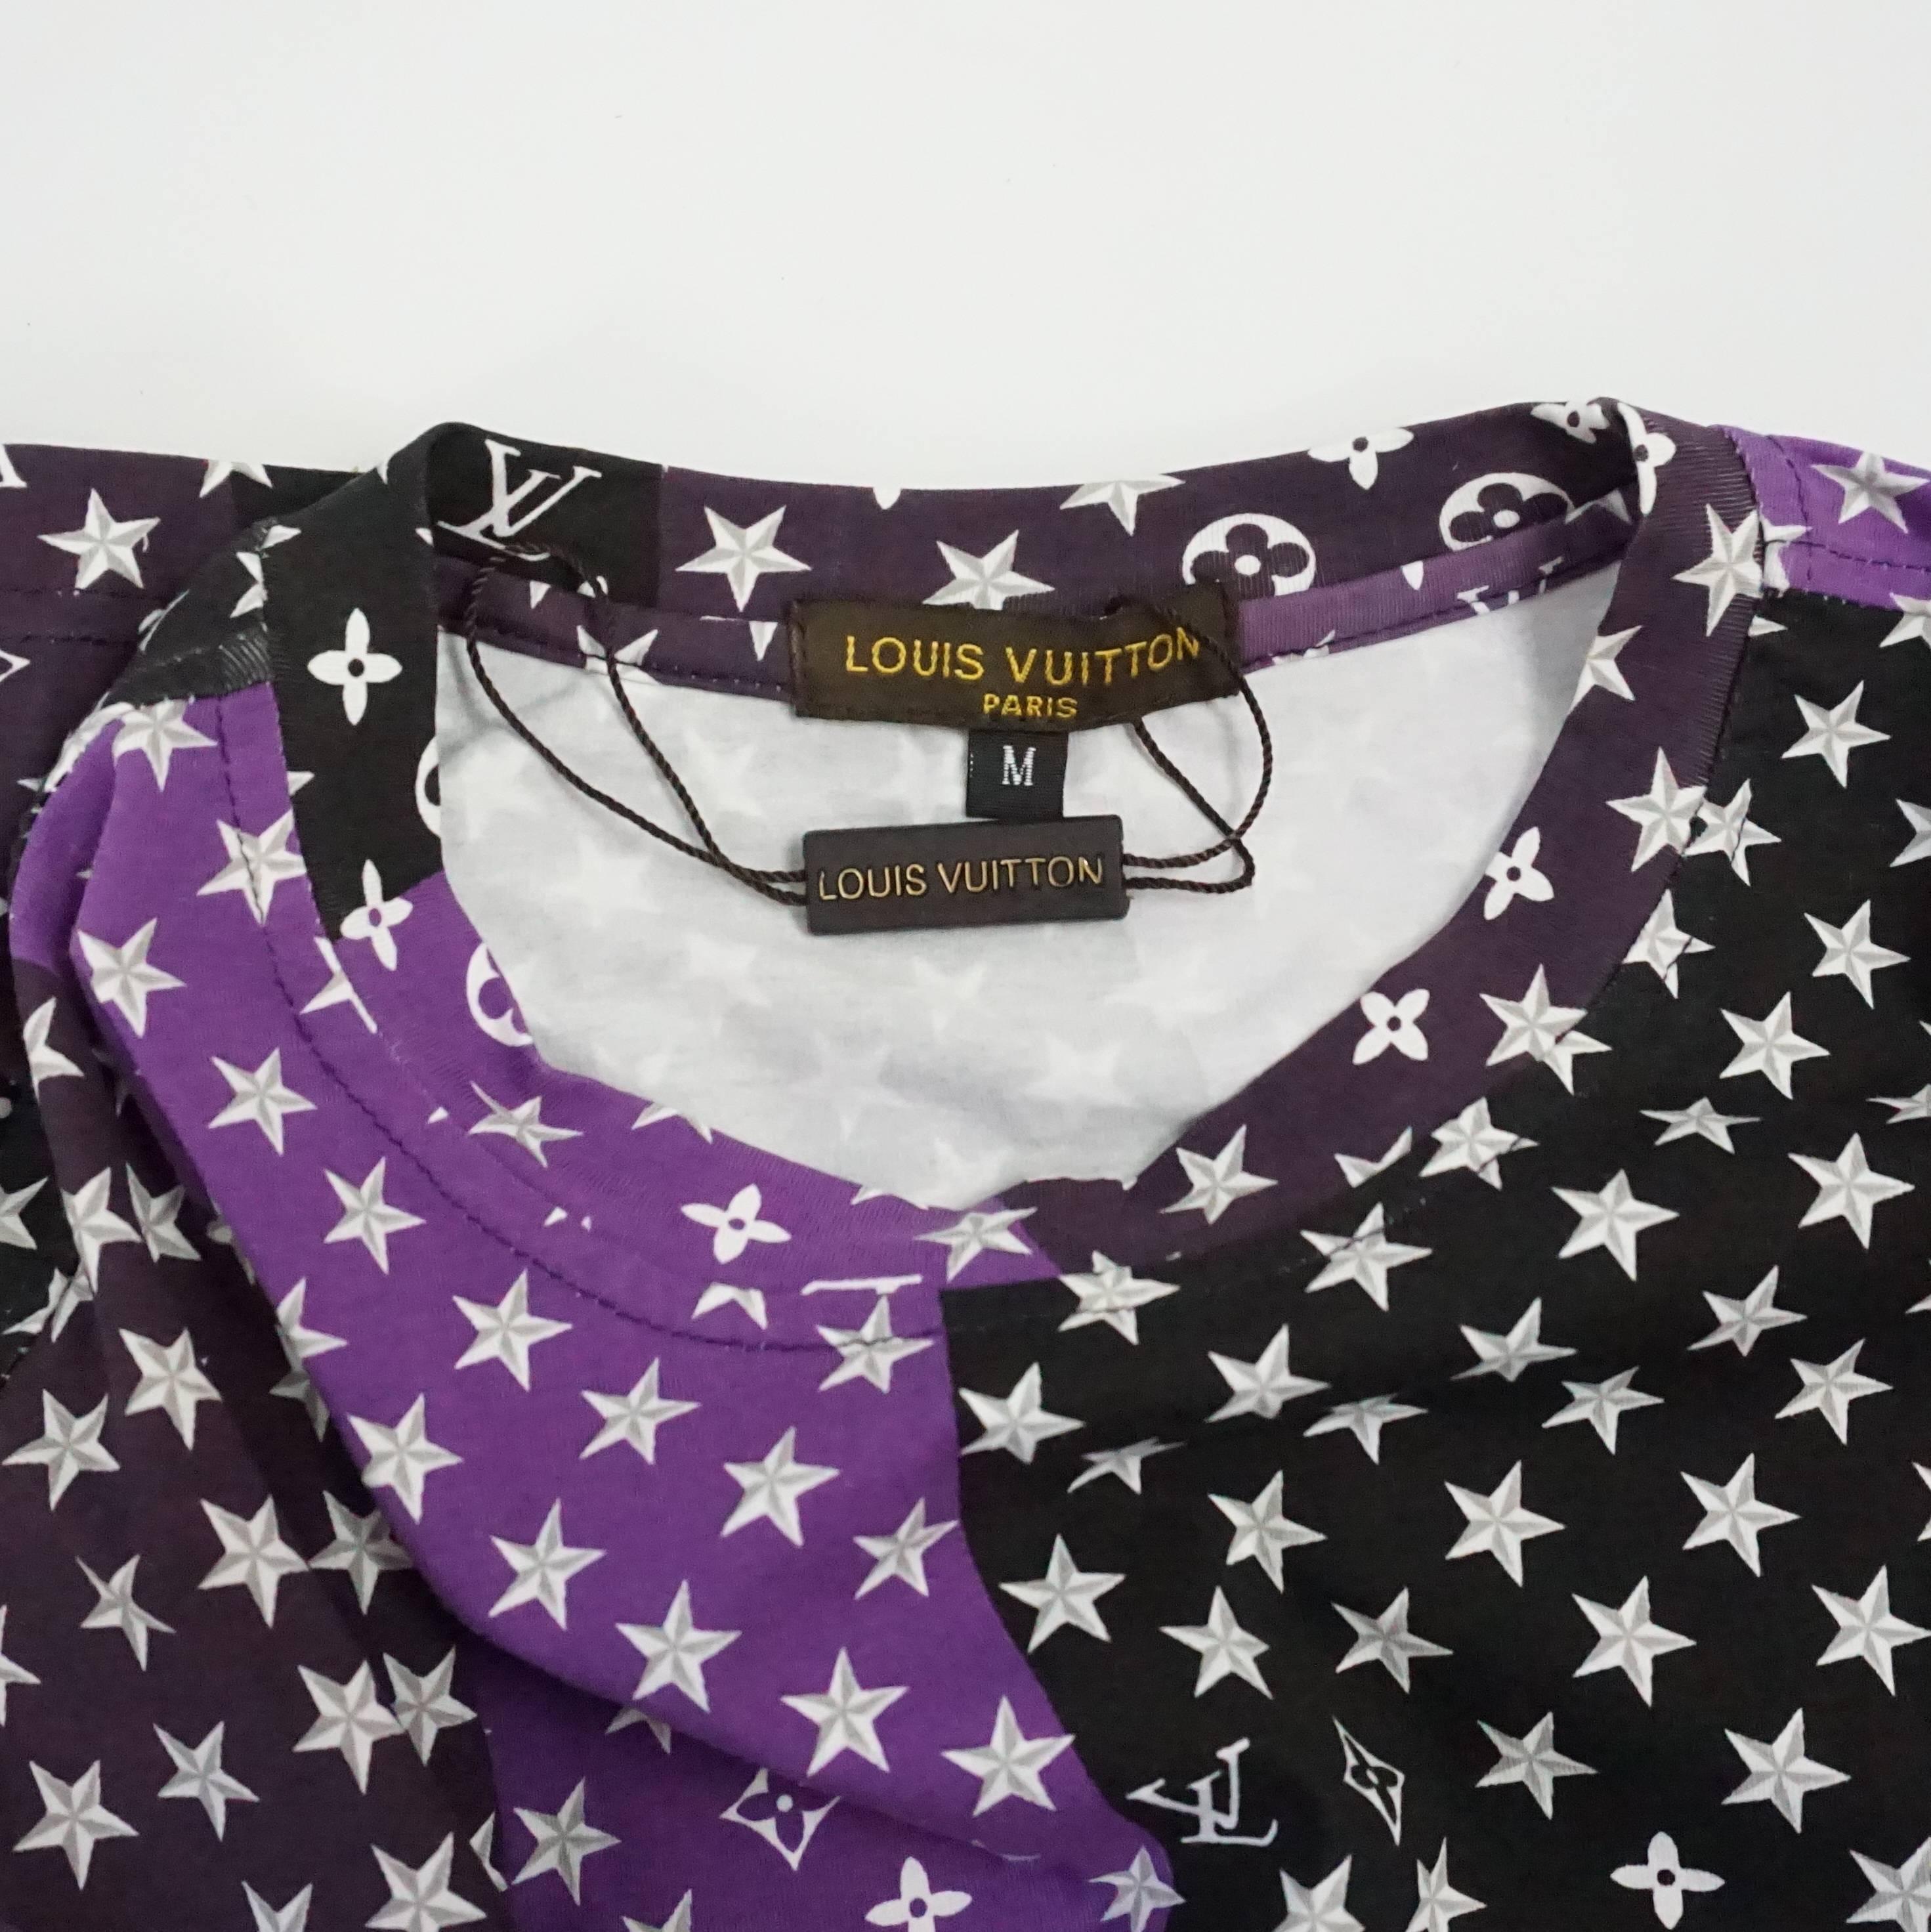 Black Louis Vuitton Purple Cotton Tee with Monogram Design - M - NWT